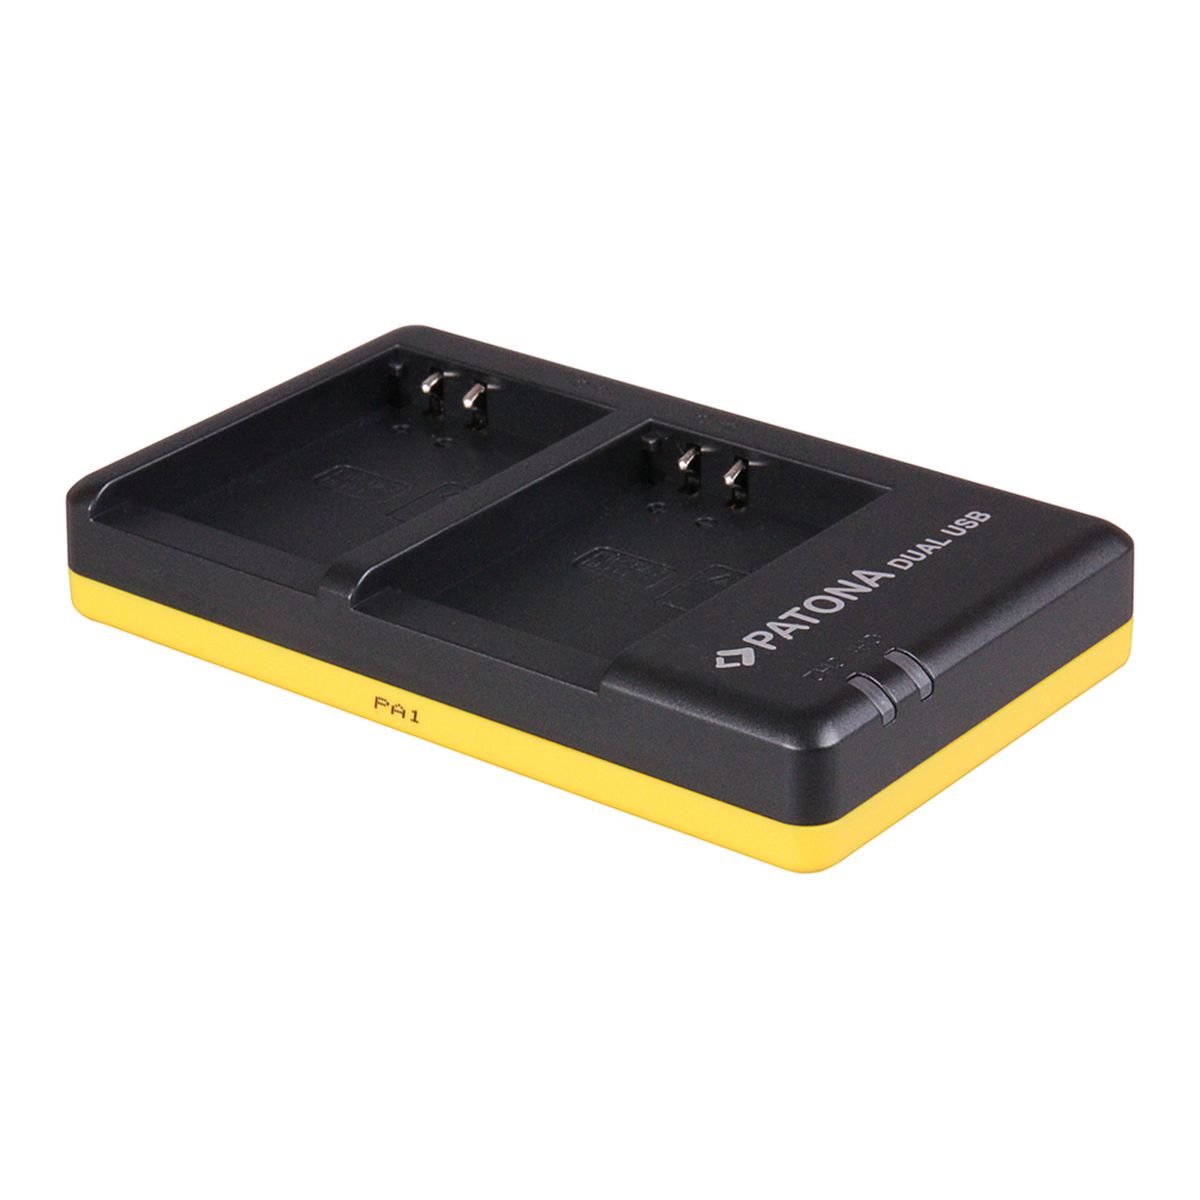 Patona Dual USB Schnell-Ladegerät Olympus PS-BLN 1